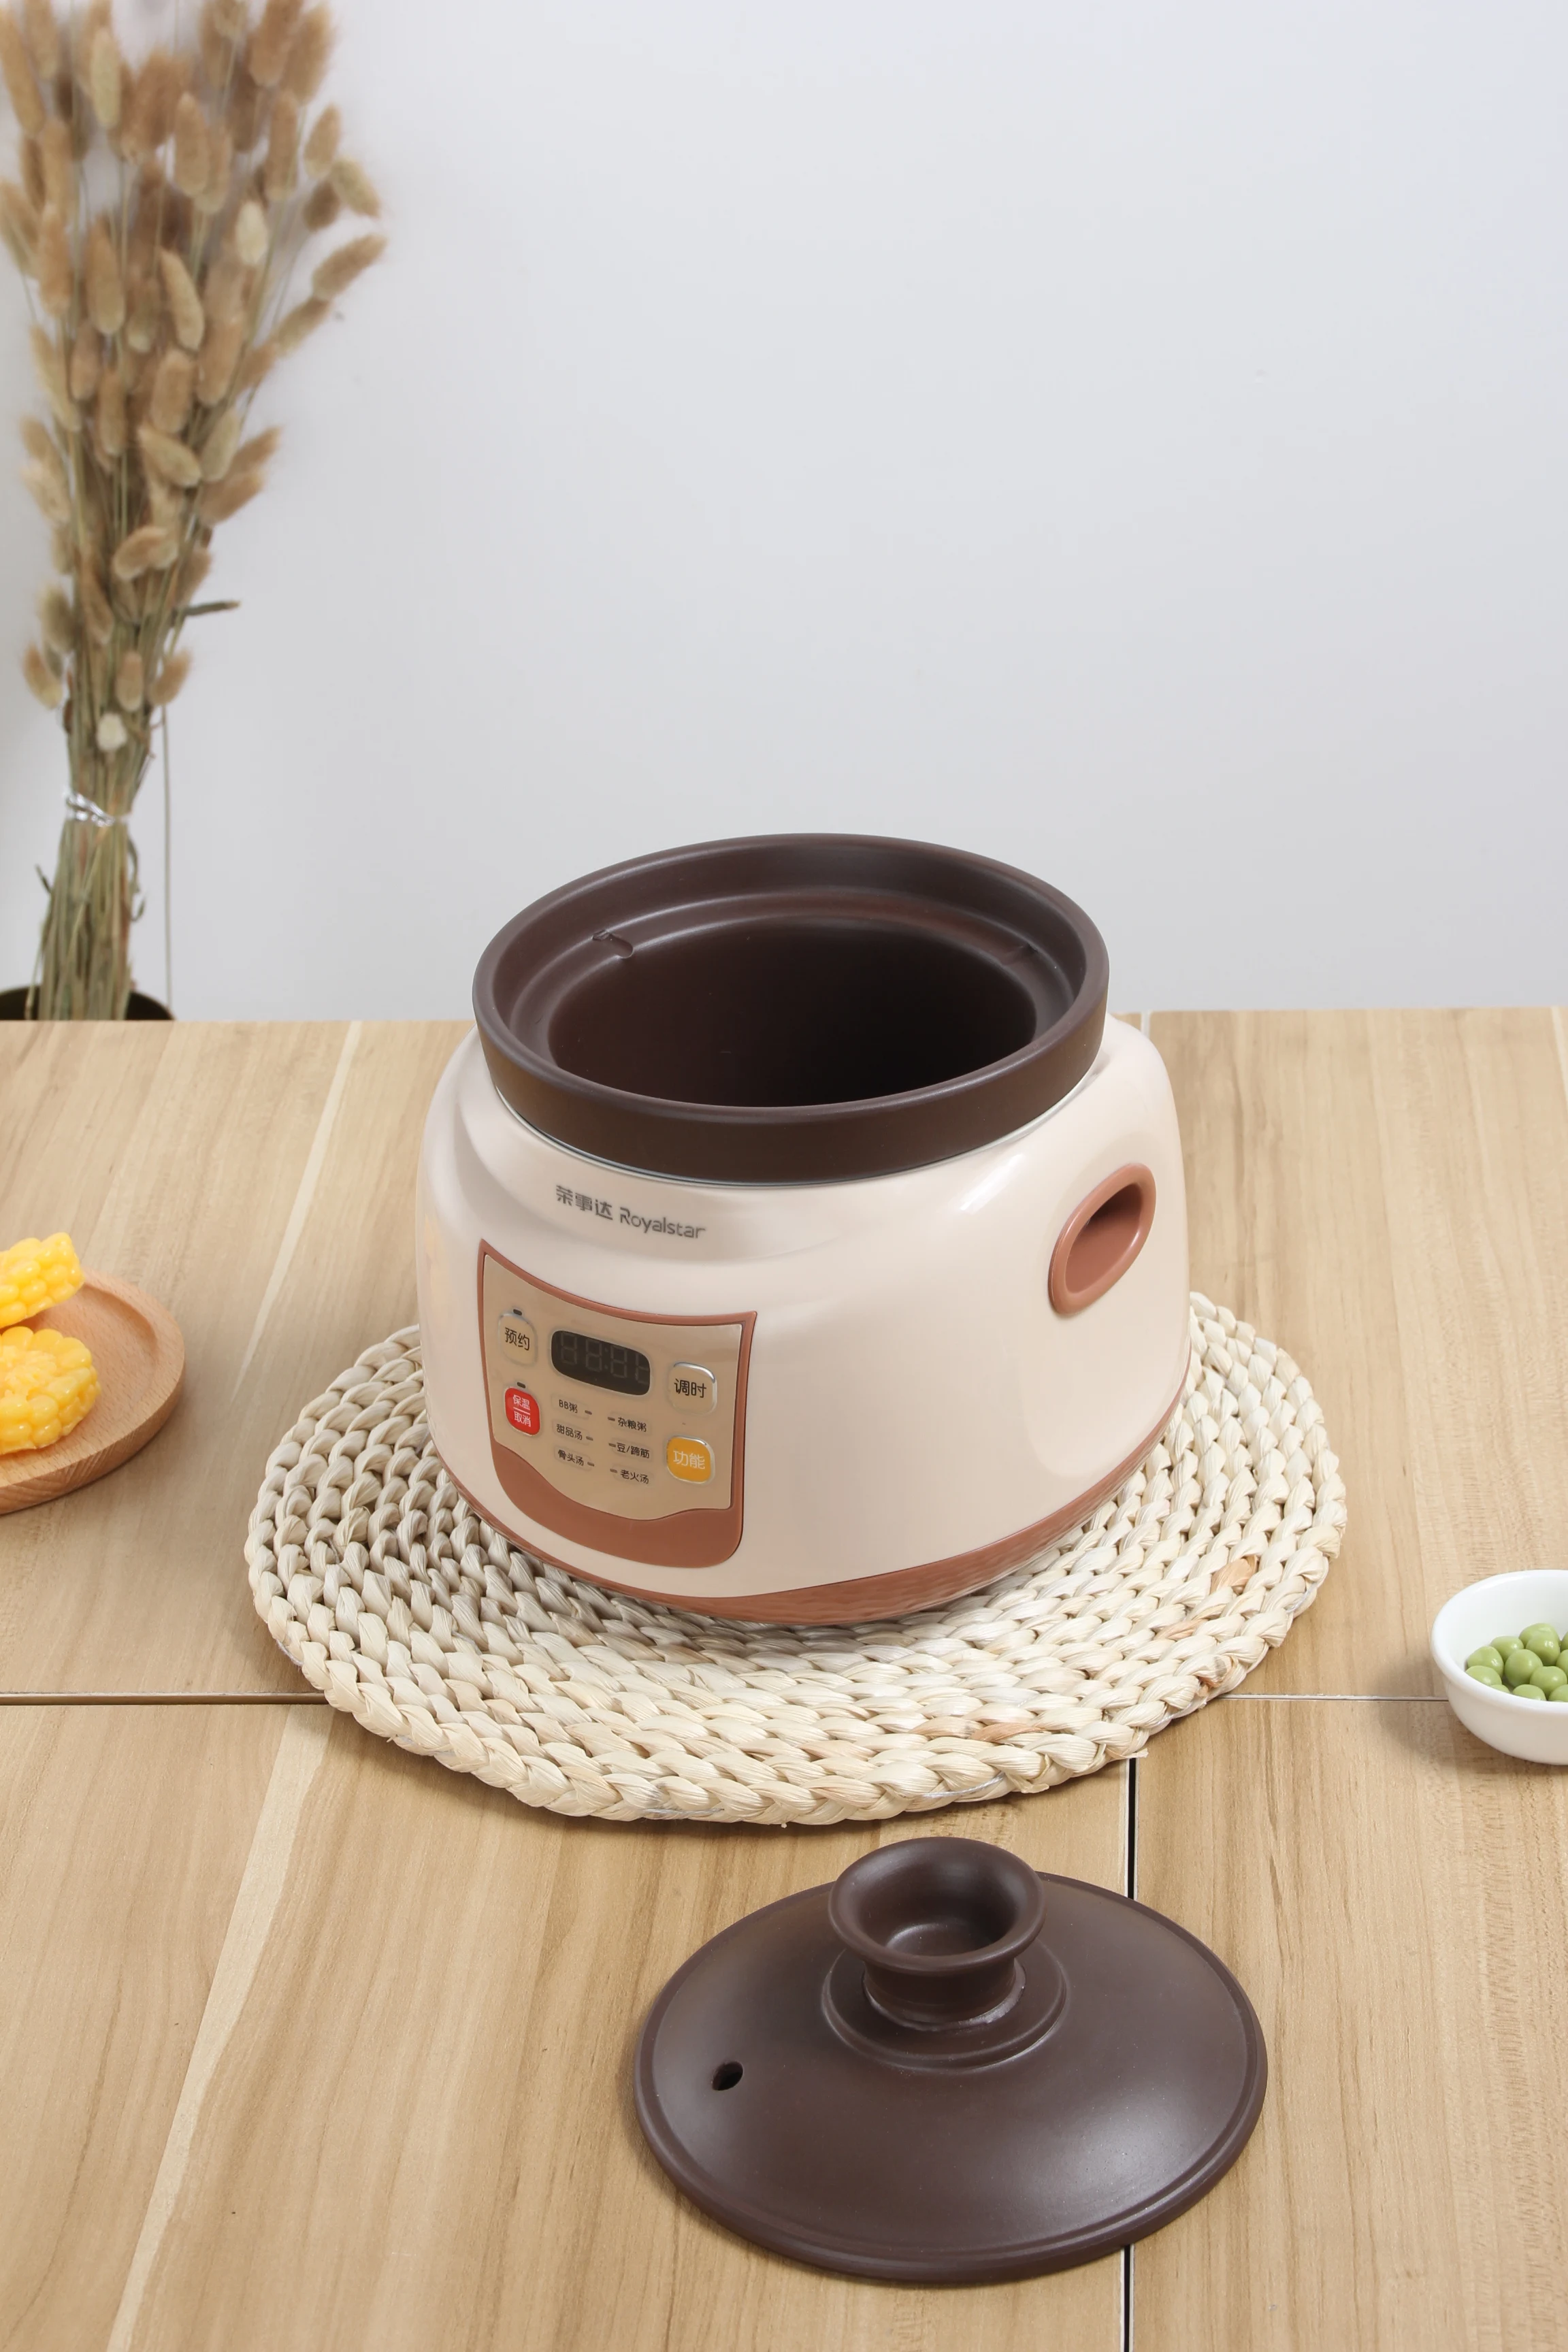 round shape electric ceramic crock pot